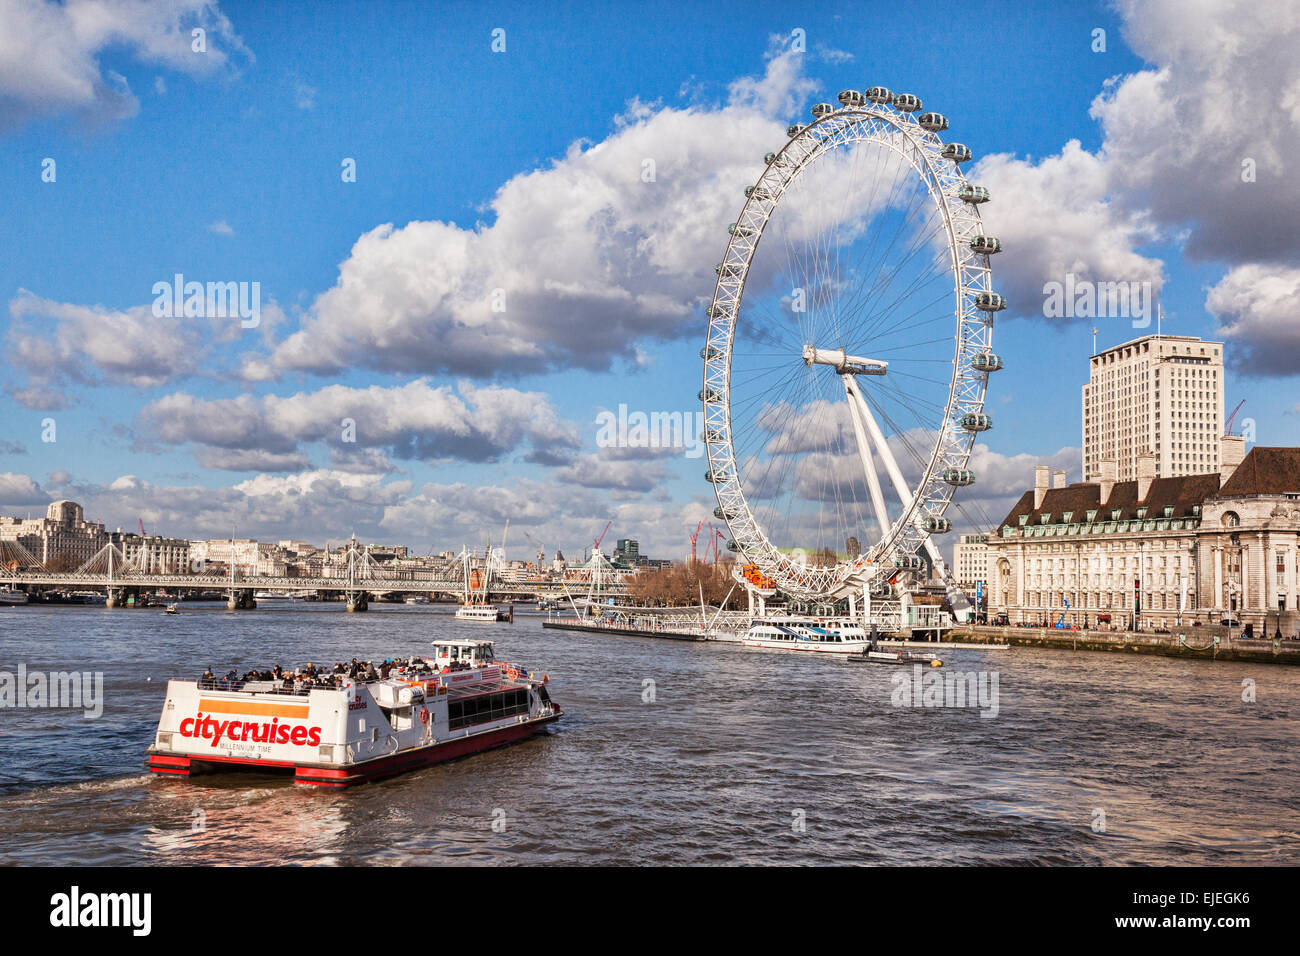 City Cruises riverboat près du London Eye, Londres, Angleterre. Banque D'Images